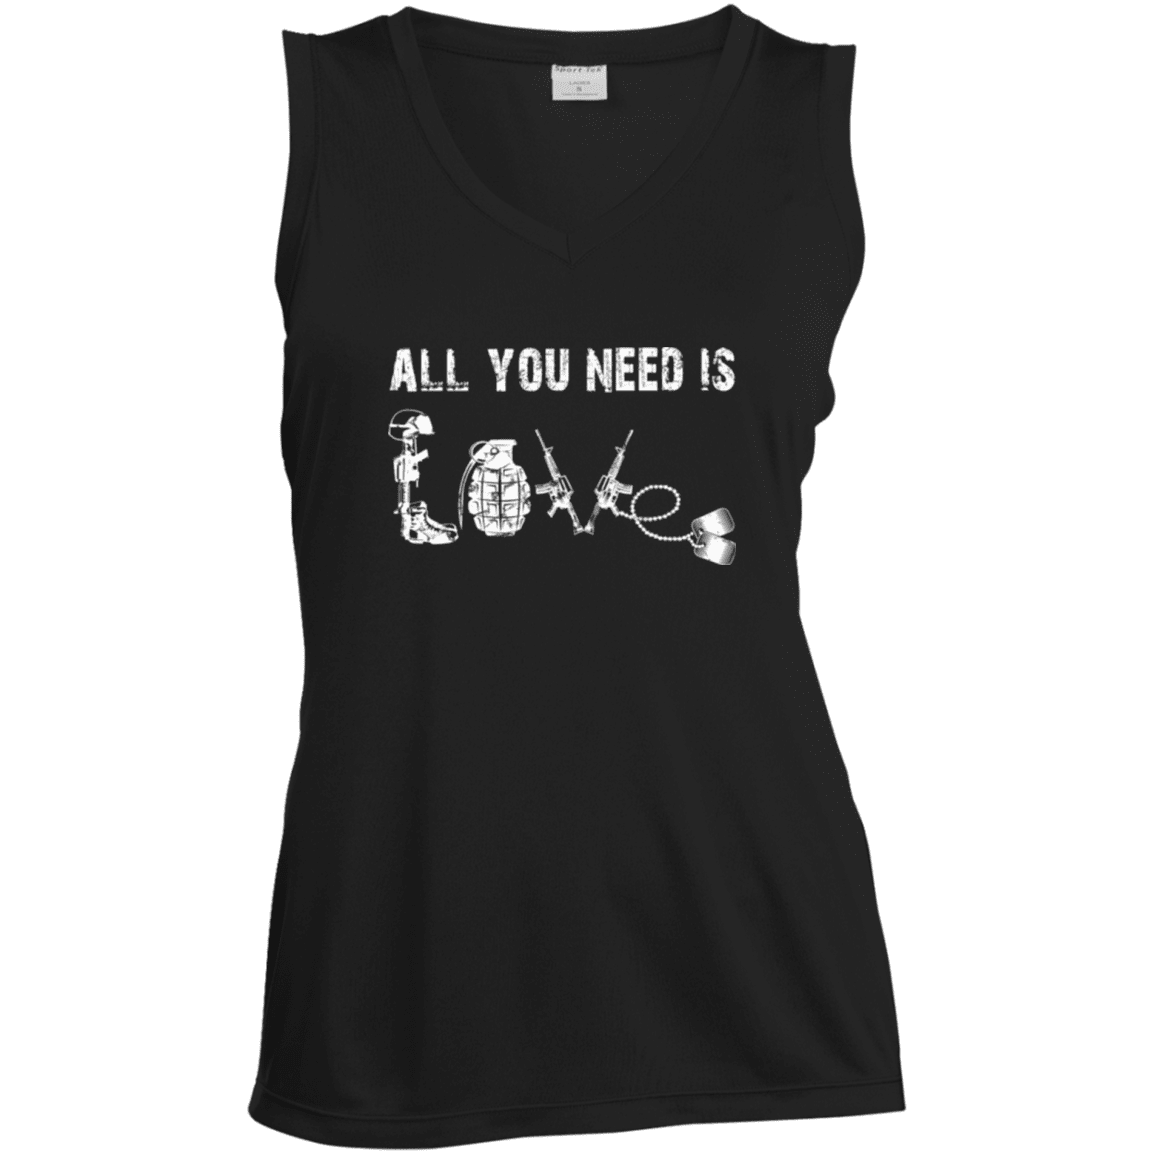 Military T-Shirt "All You Need is Love Veteran"-TShirt-General-Veterans Nation